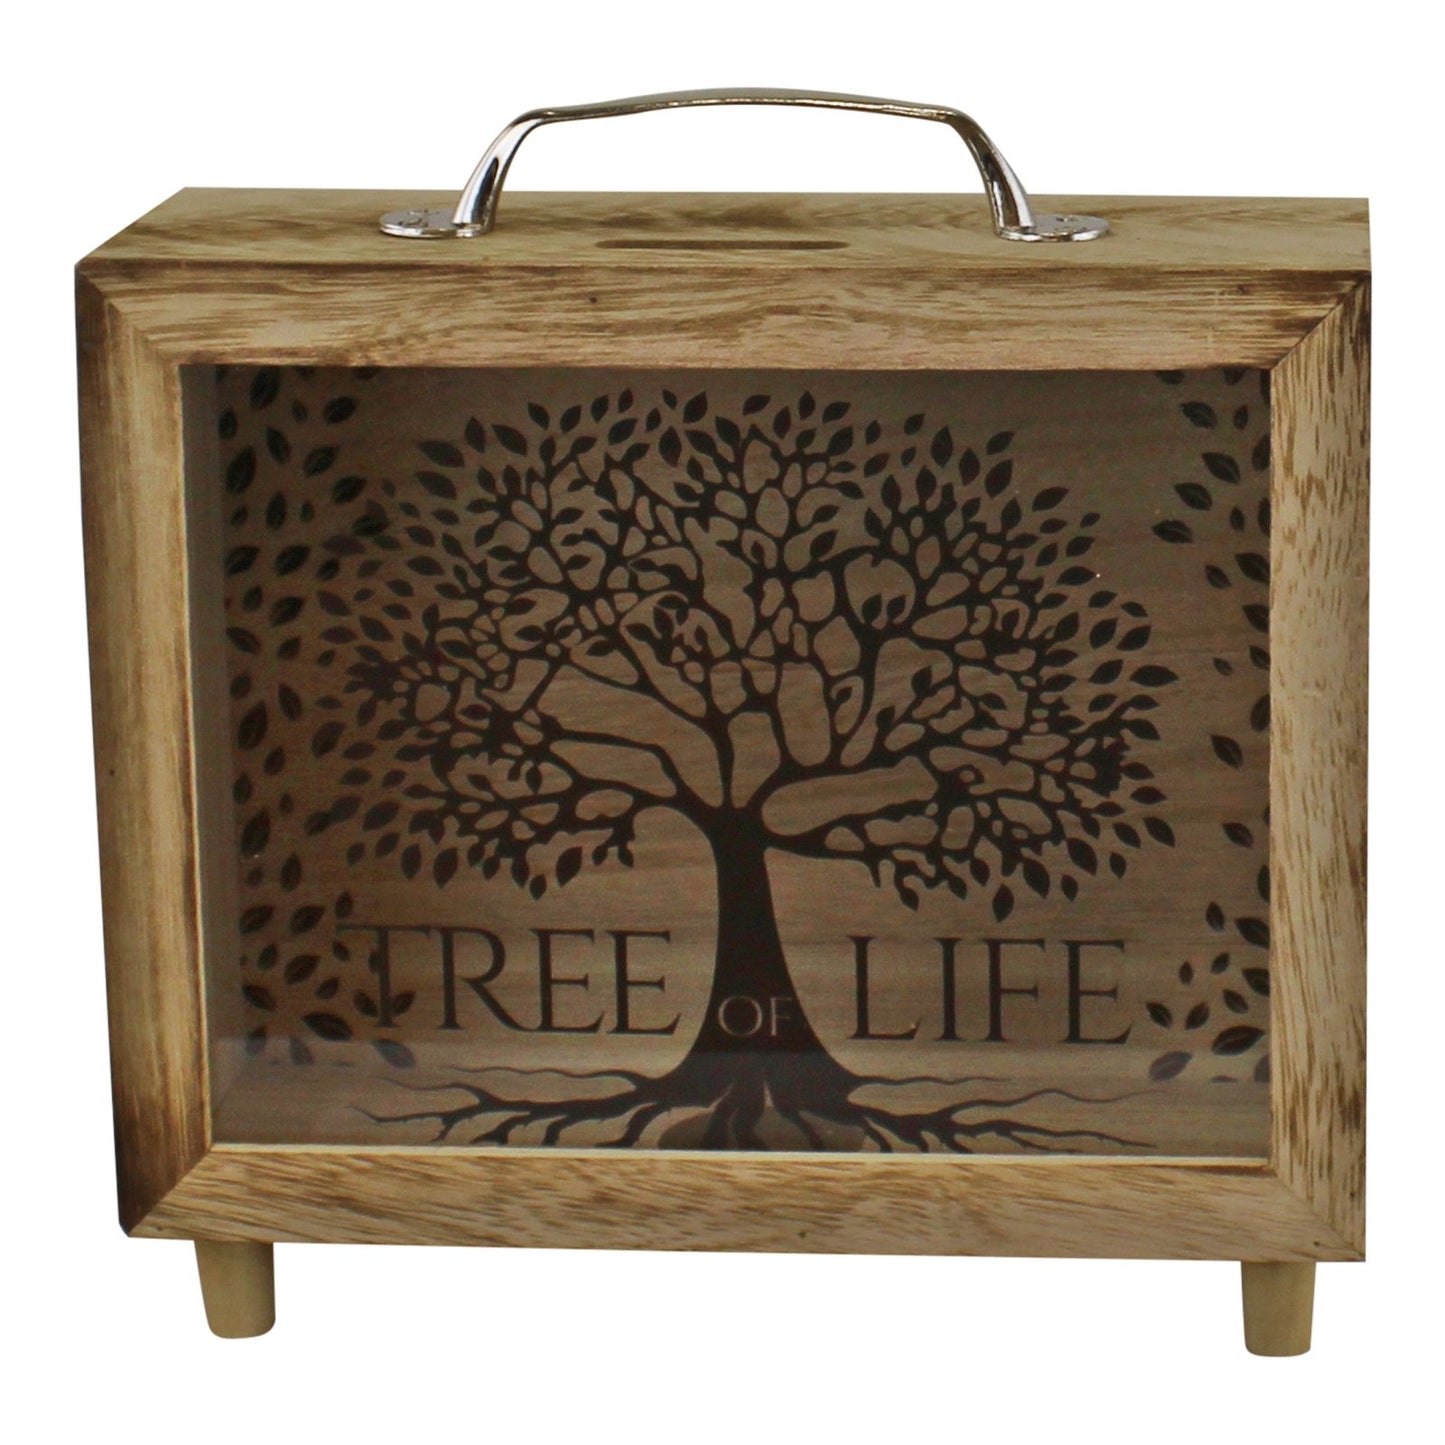 Tree Of Life Money Box